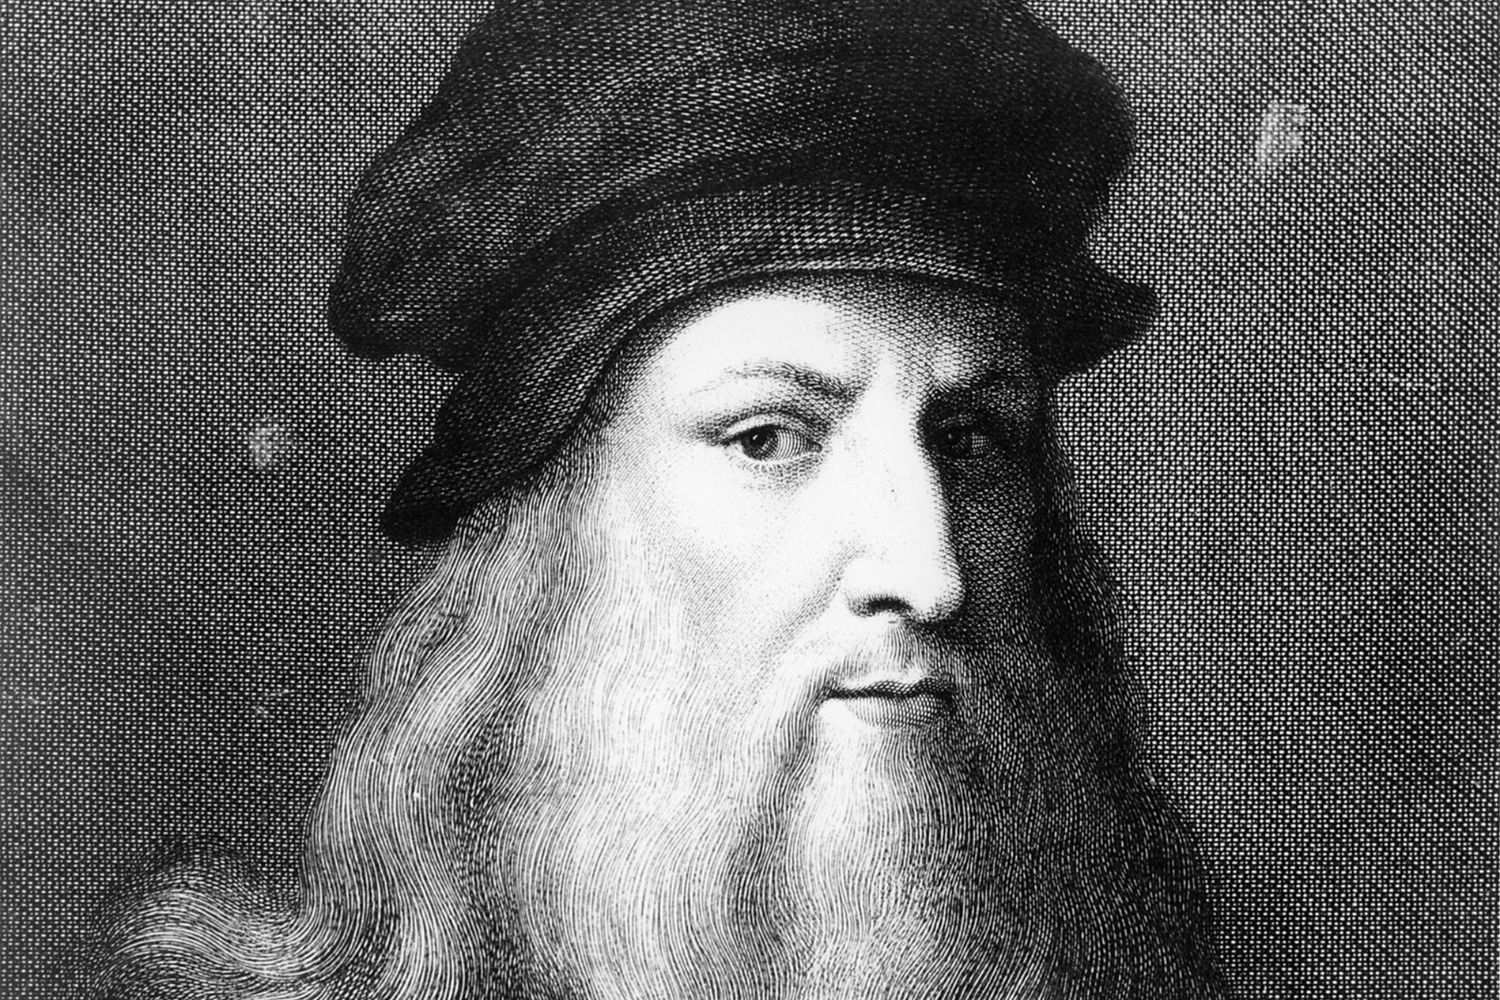 Leonardo Da Vinci - Artist who creates Artwork